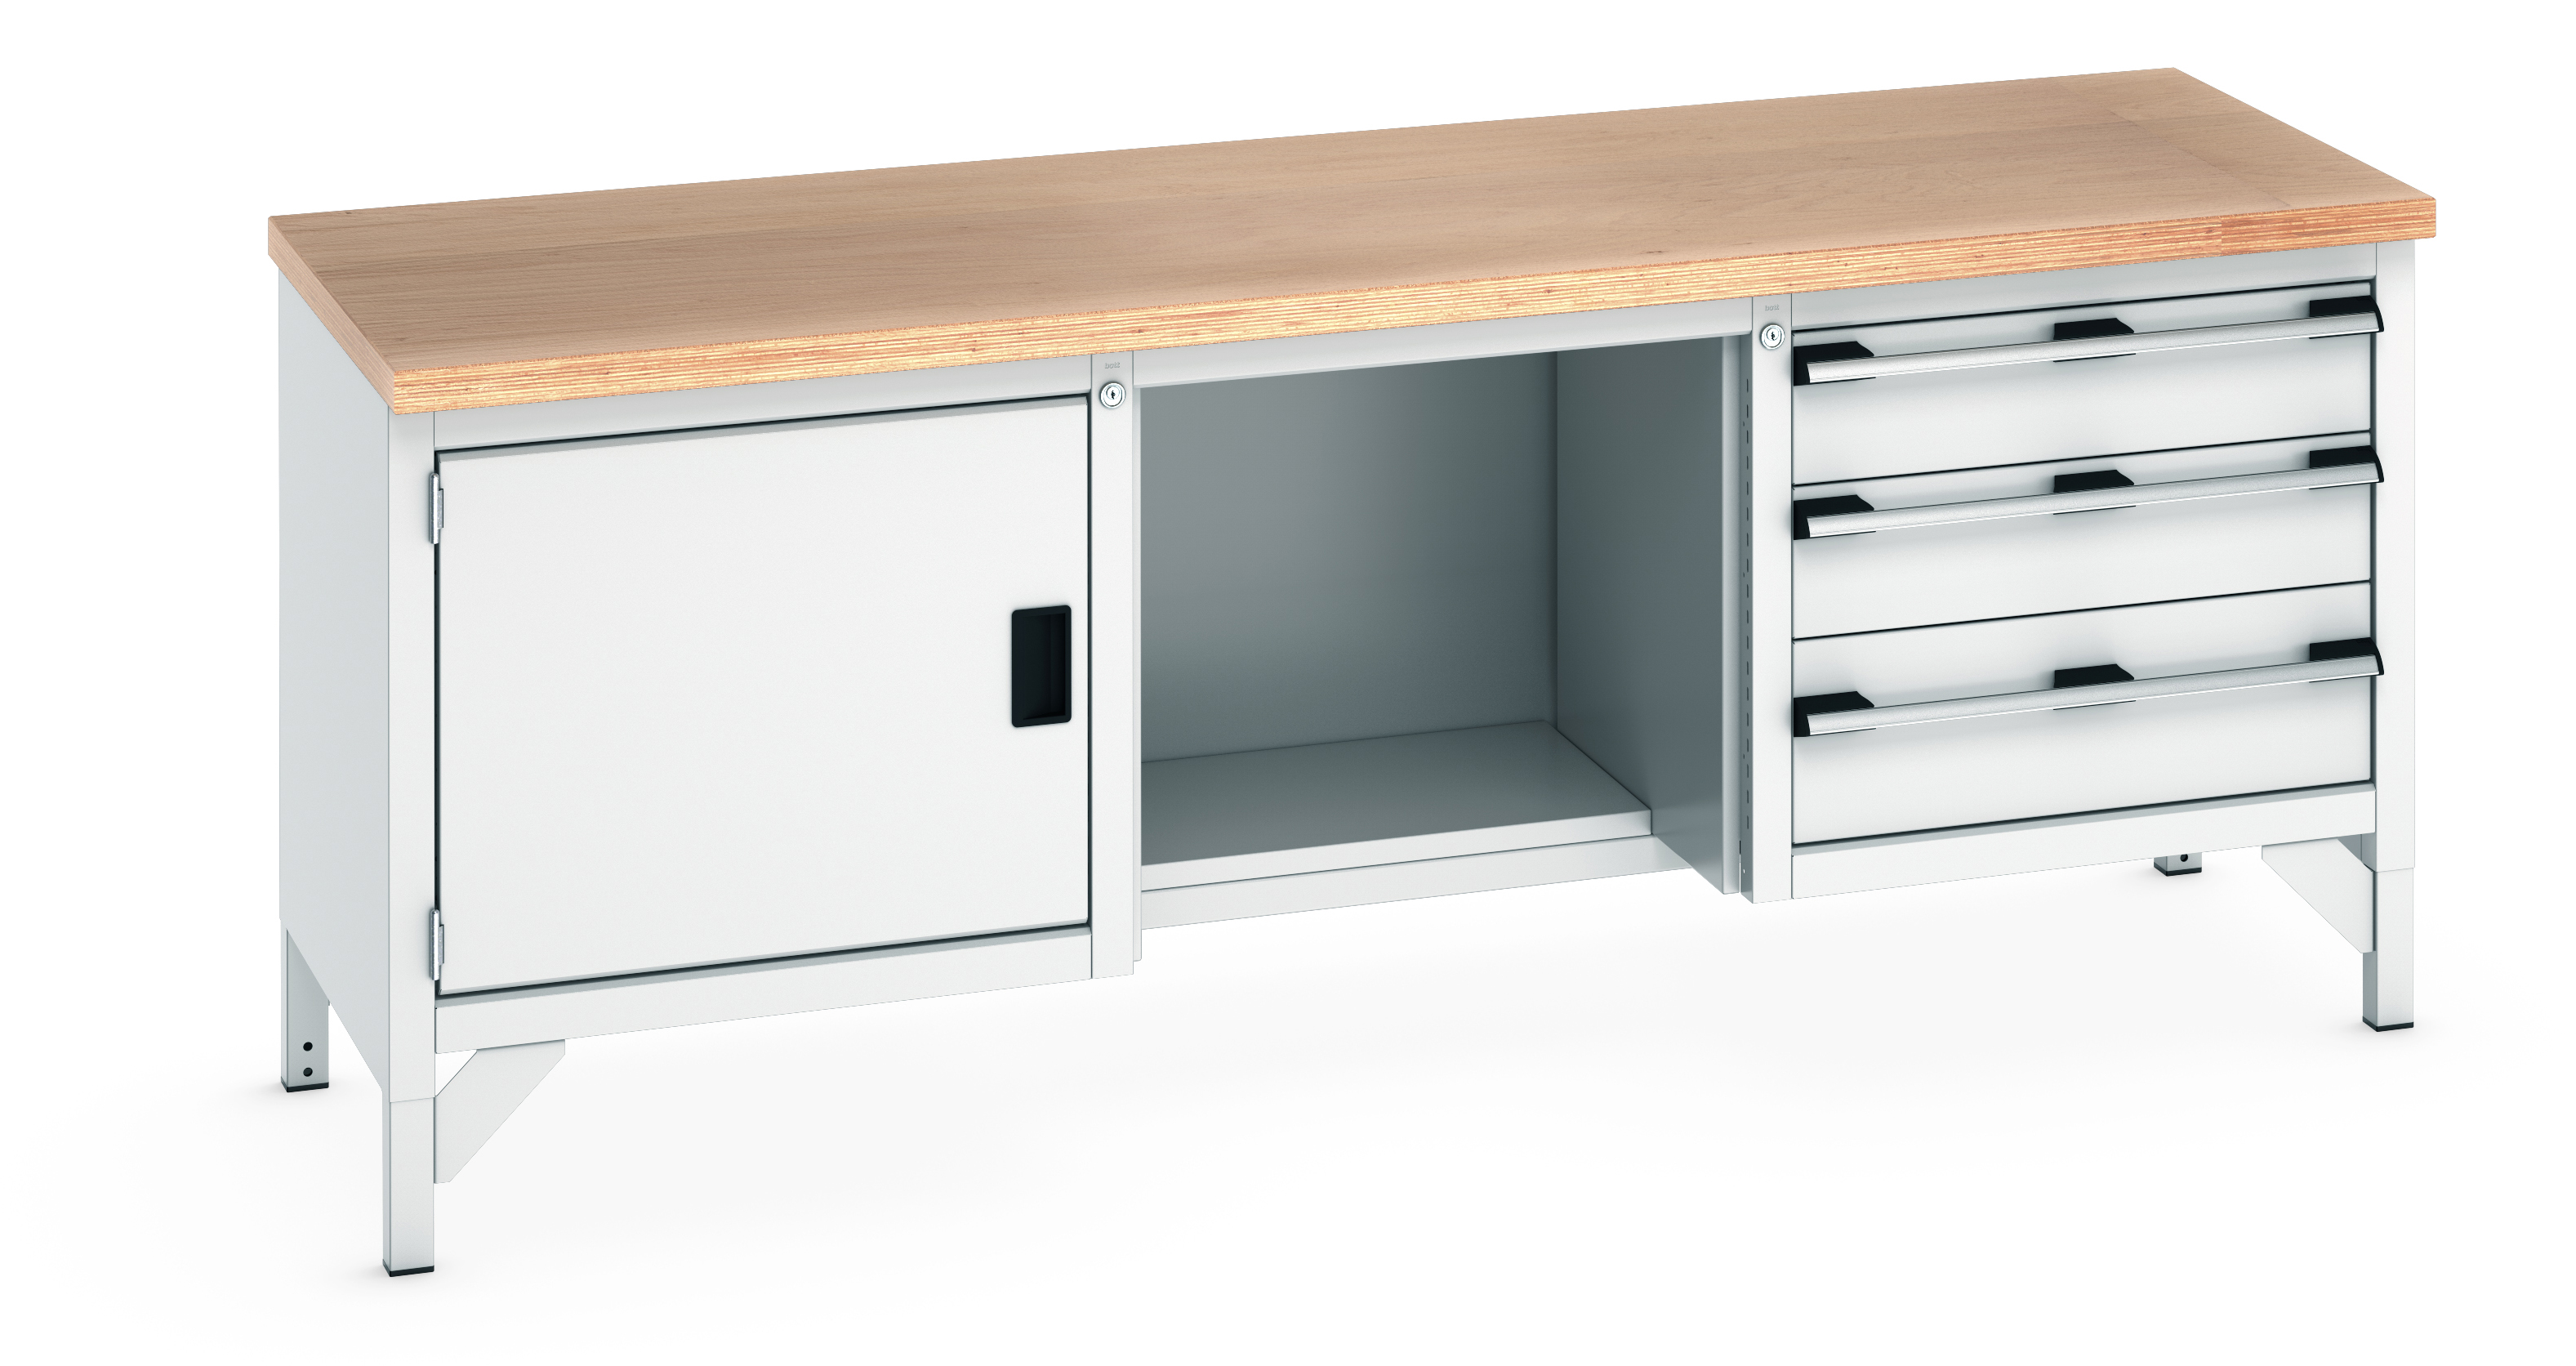 Bott Cubio Storage Bench With Full Cupboard / Open With Half Depth Base Shelf / 3 Drawer Cabinet - 41002070.16V